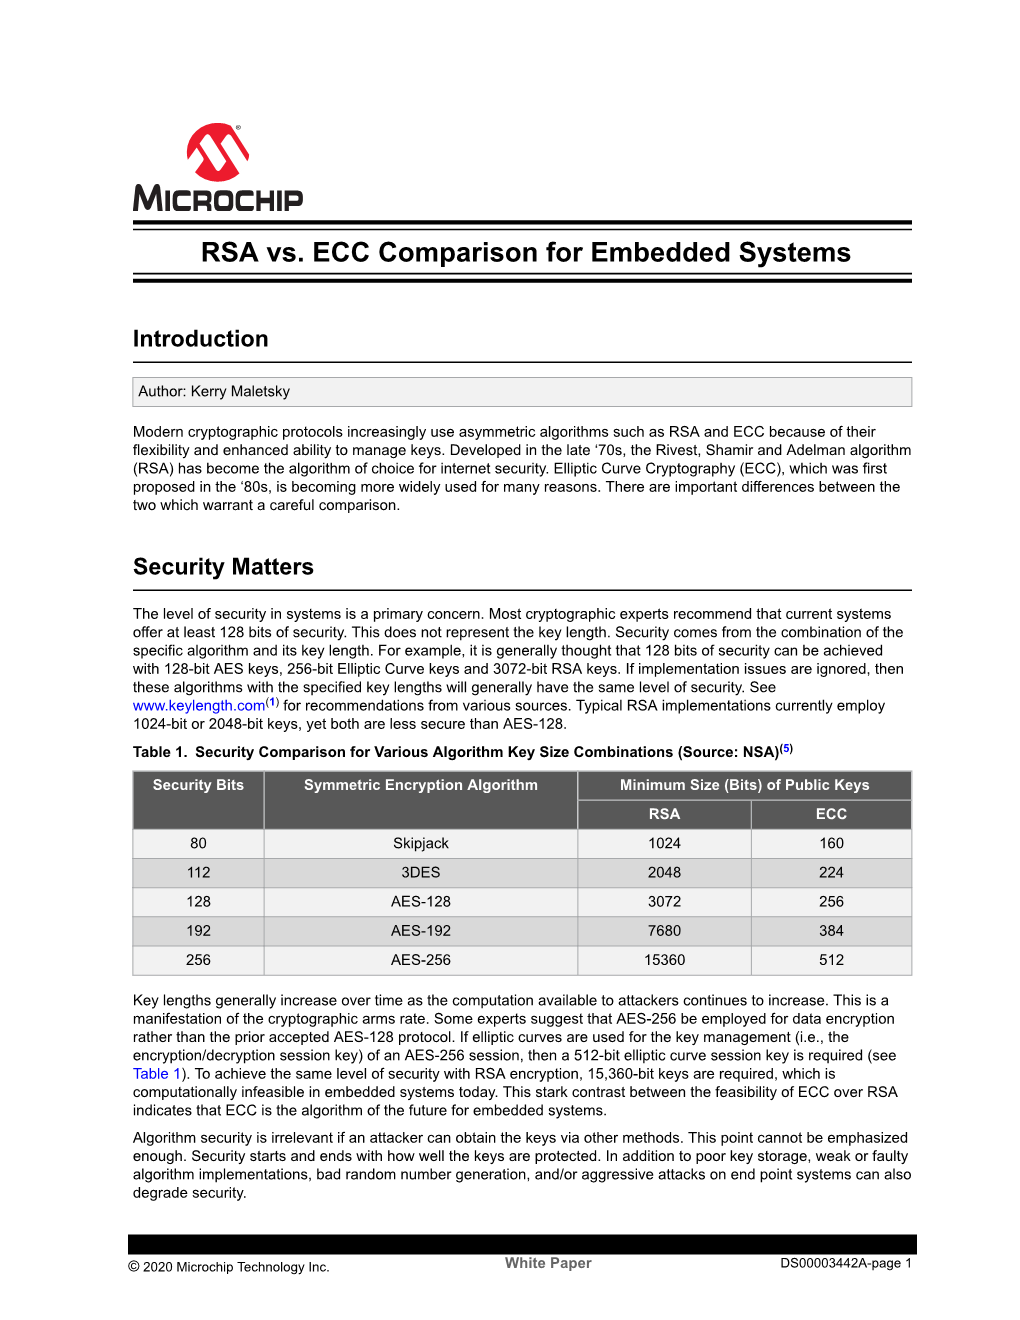 RSA Vs. ECC Comparison for Embedded Systems